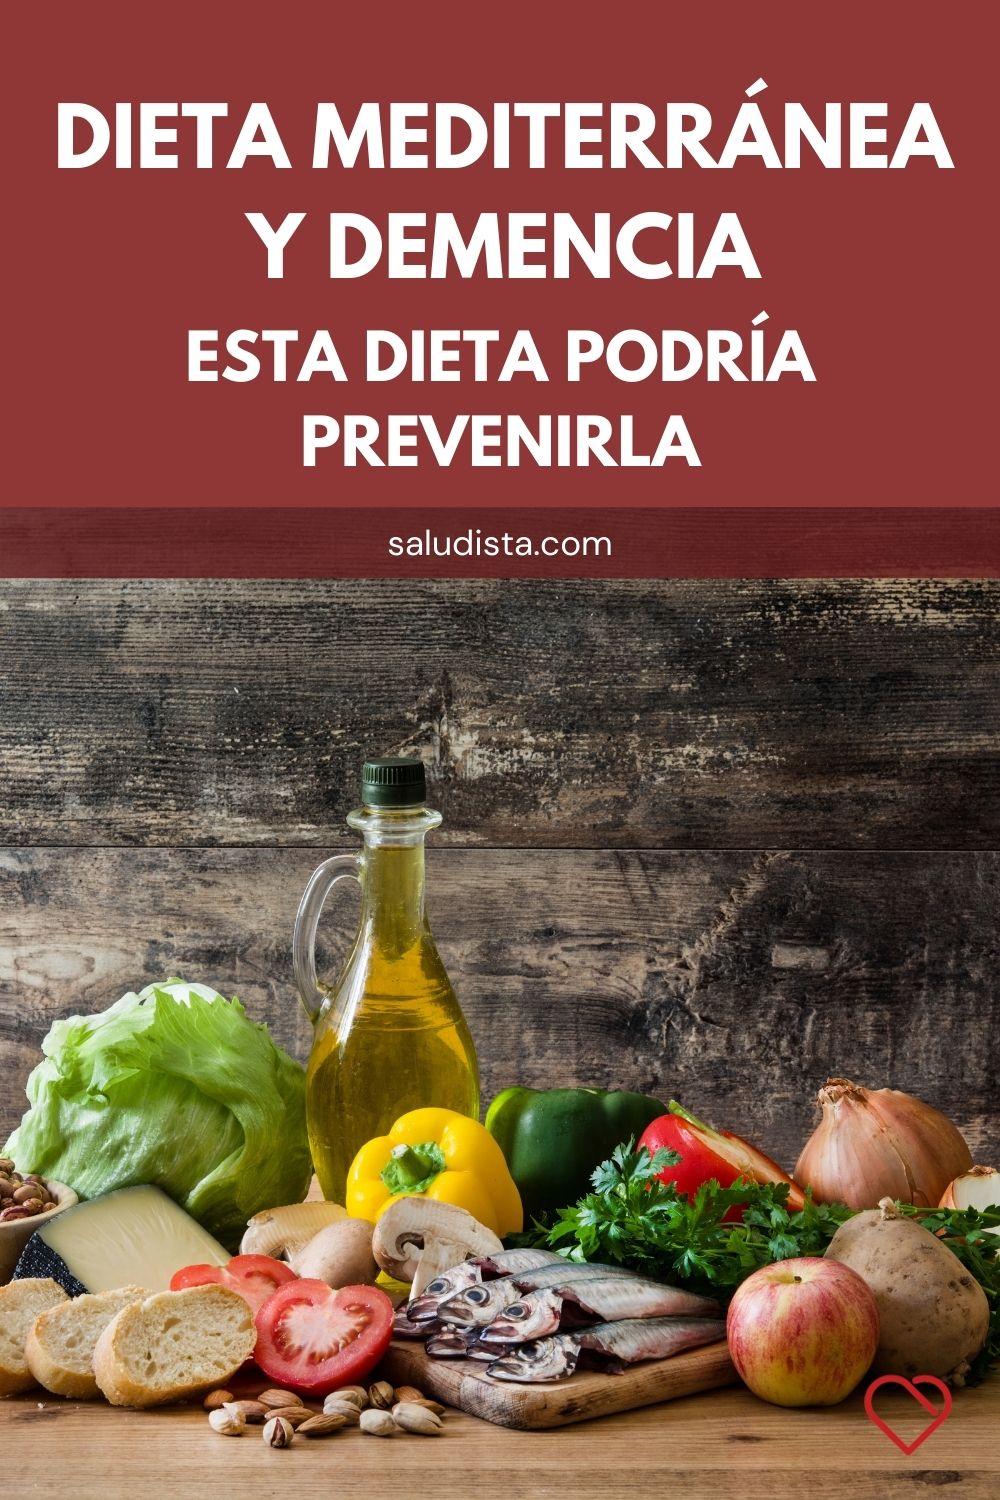 Dieta mediterránea y demencia: esta dieta podría prevenirla